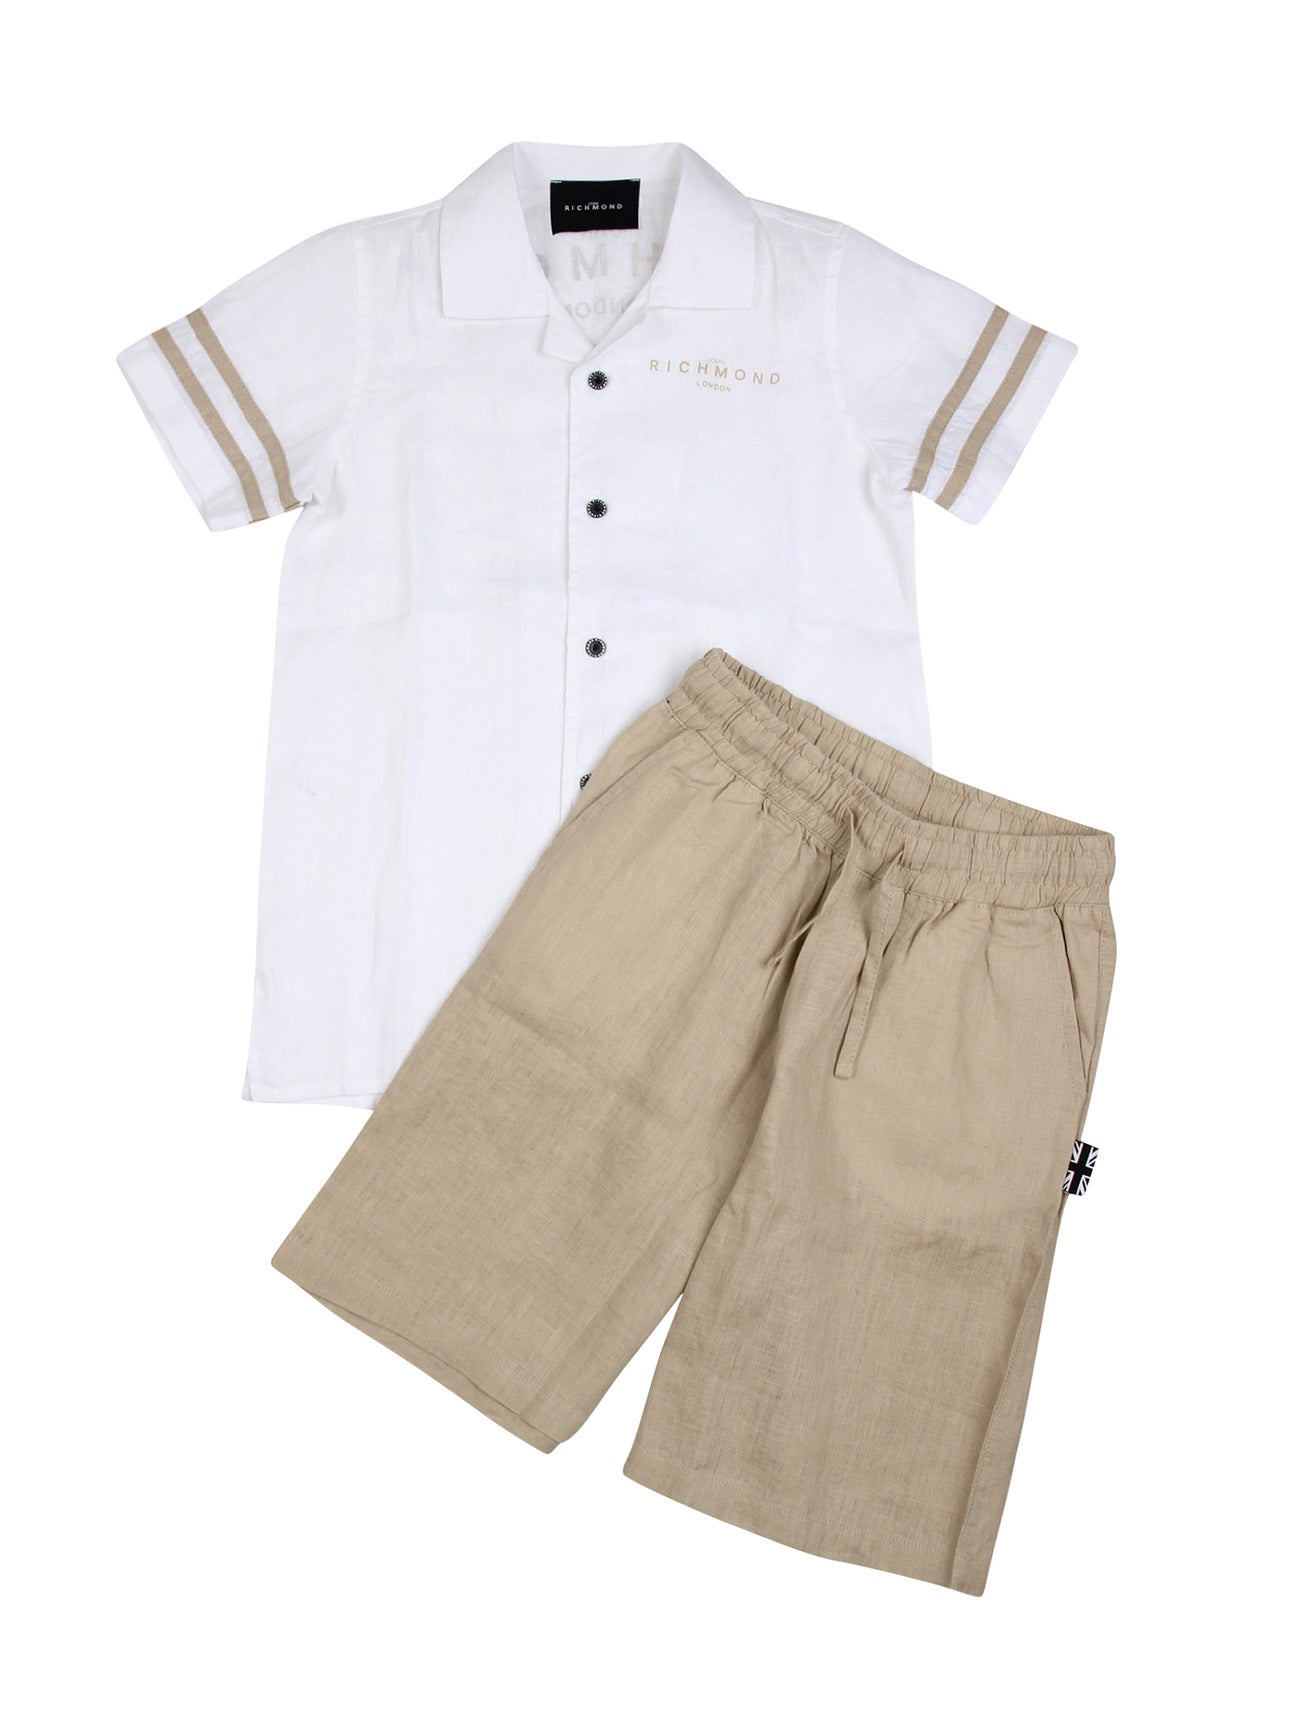 JR-Boy's Set-Linen Shirt & Shorts with logo